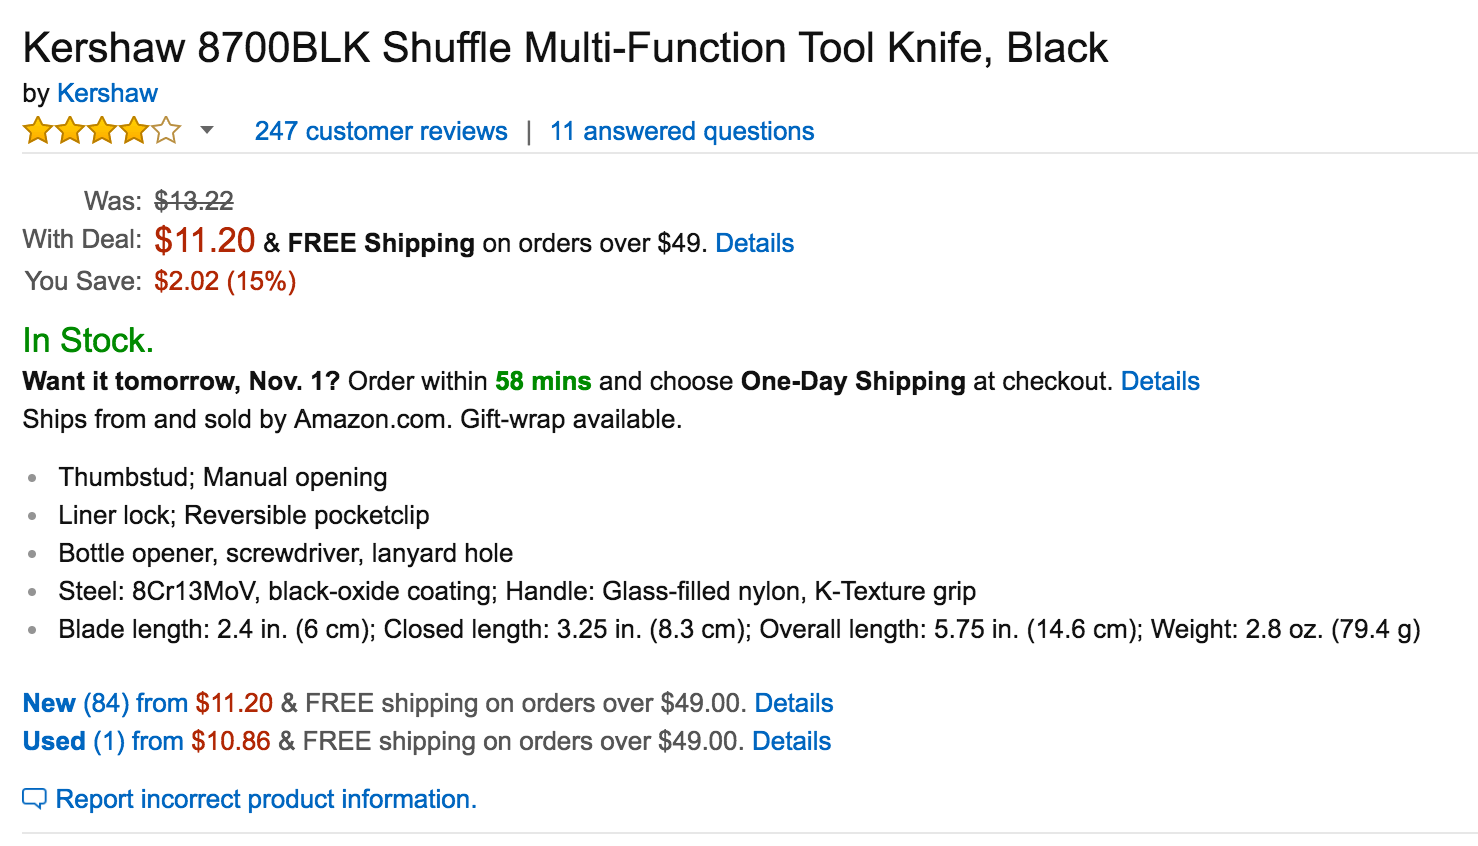 kershaw-8700blk-shuffle-multi-function-tool-knife-2